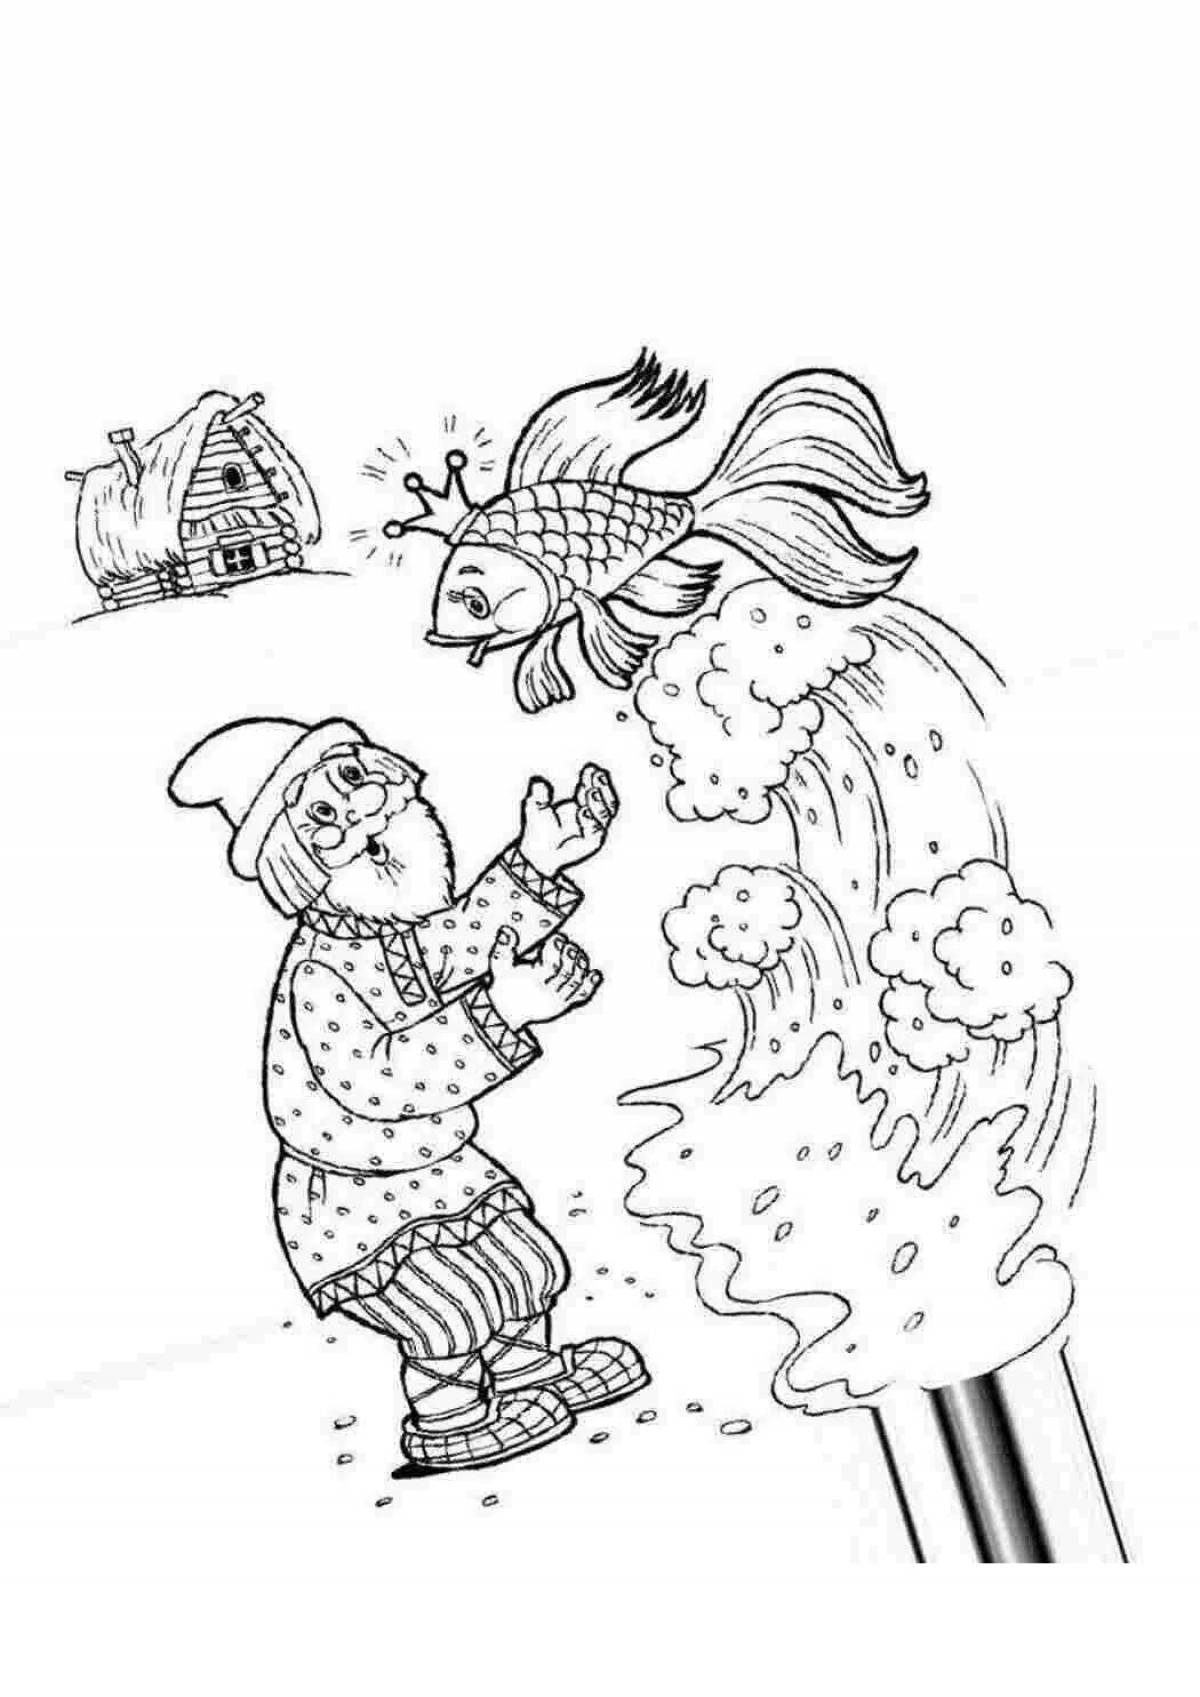 Раскраски к сказке Пушкина о рыбаке и рыбке